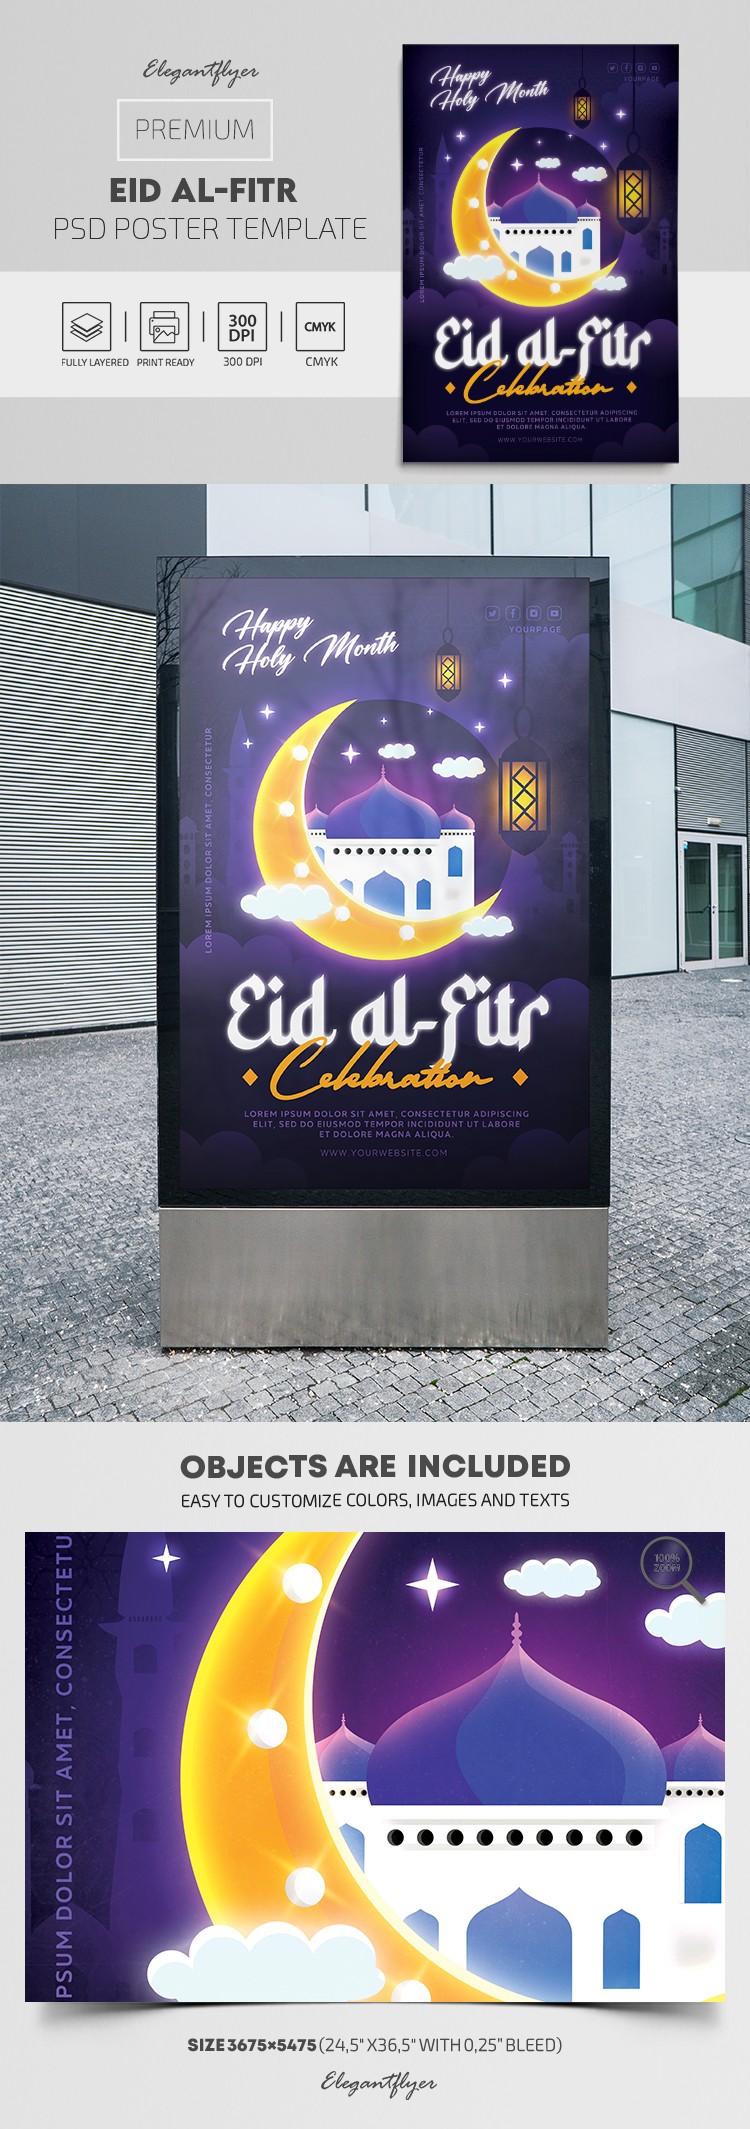 Plakat Eid Al-Fitr by ElegantFlyer